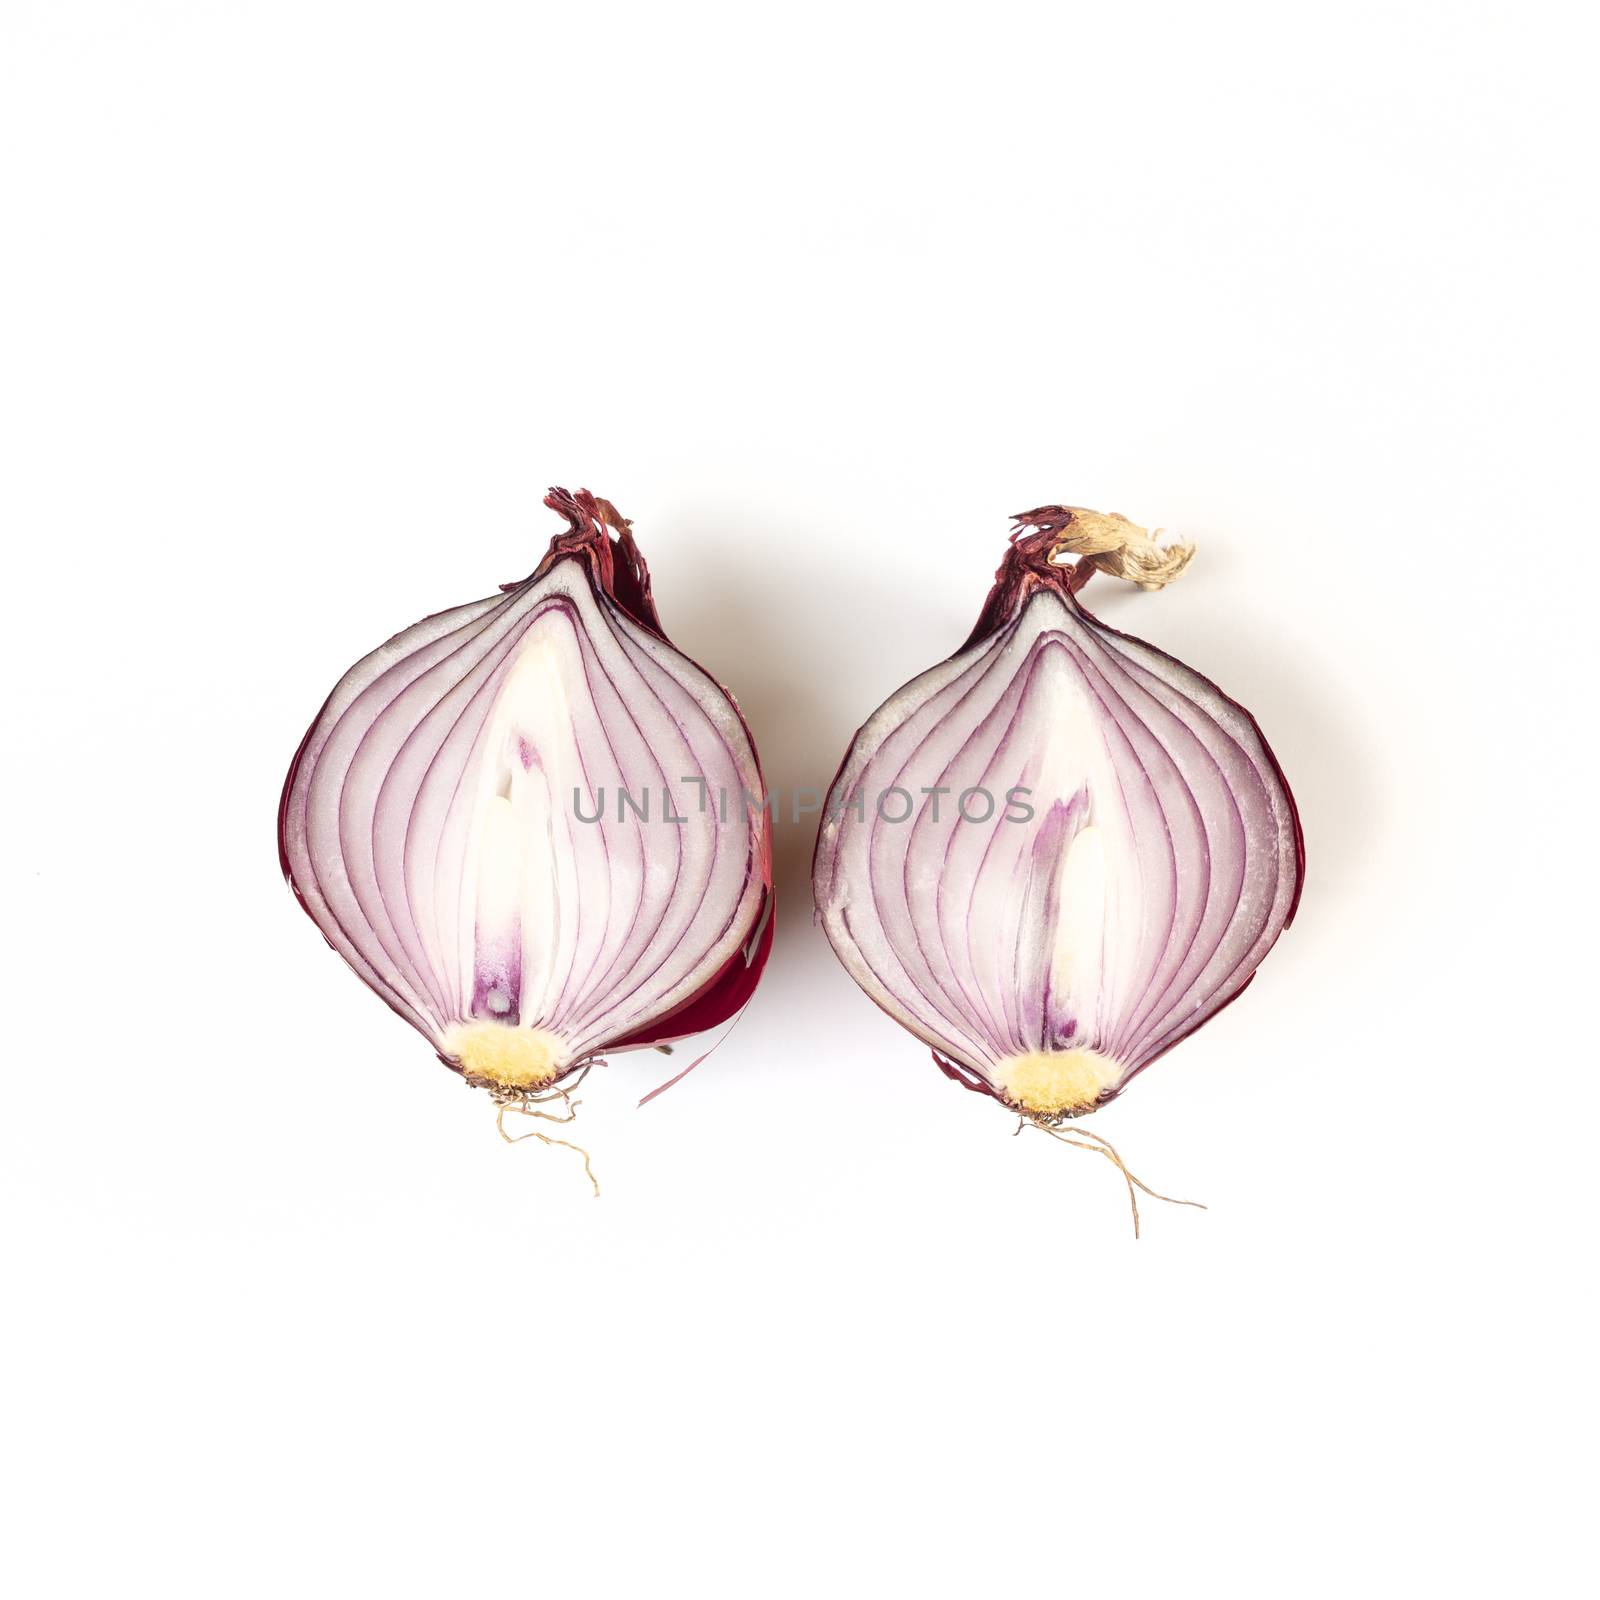 an onion cut on a white surface